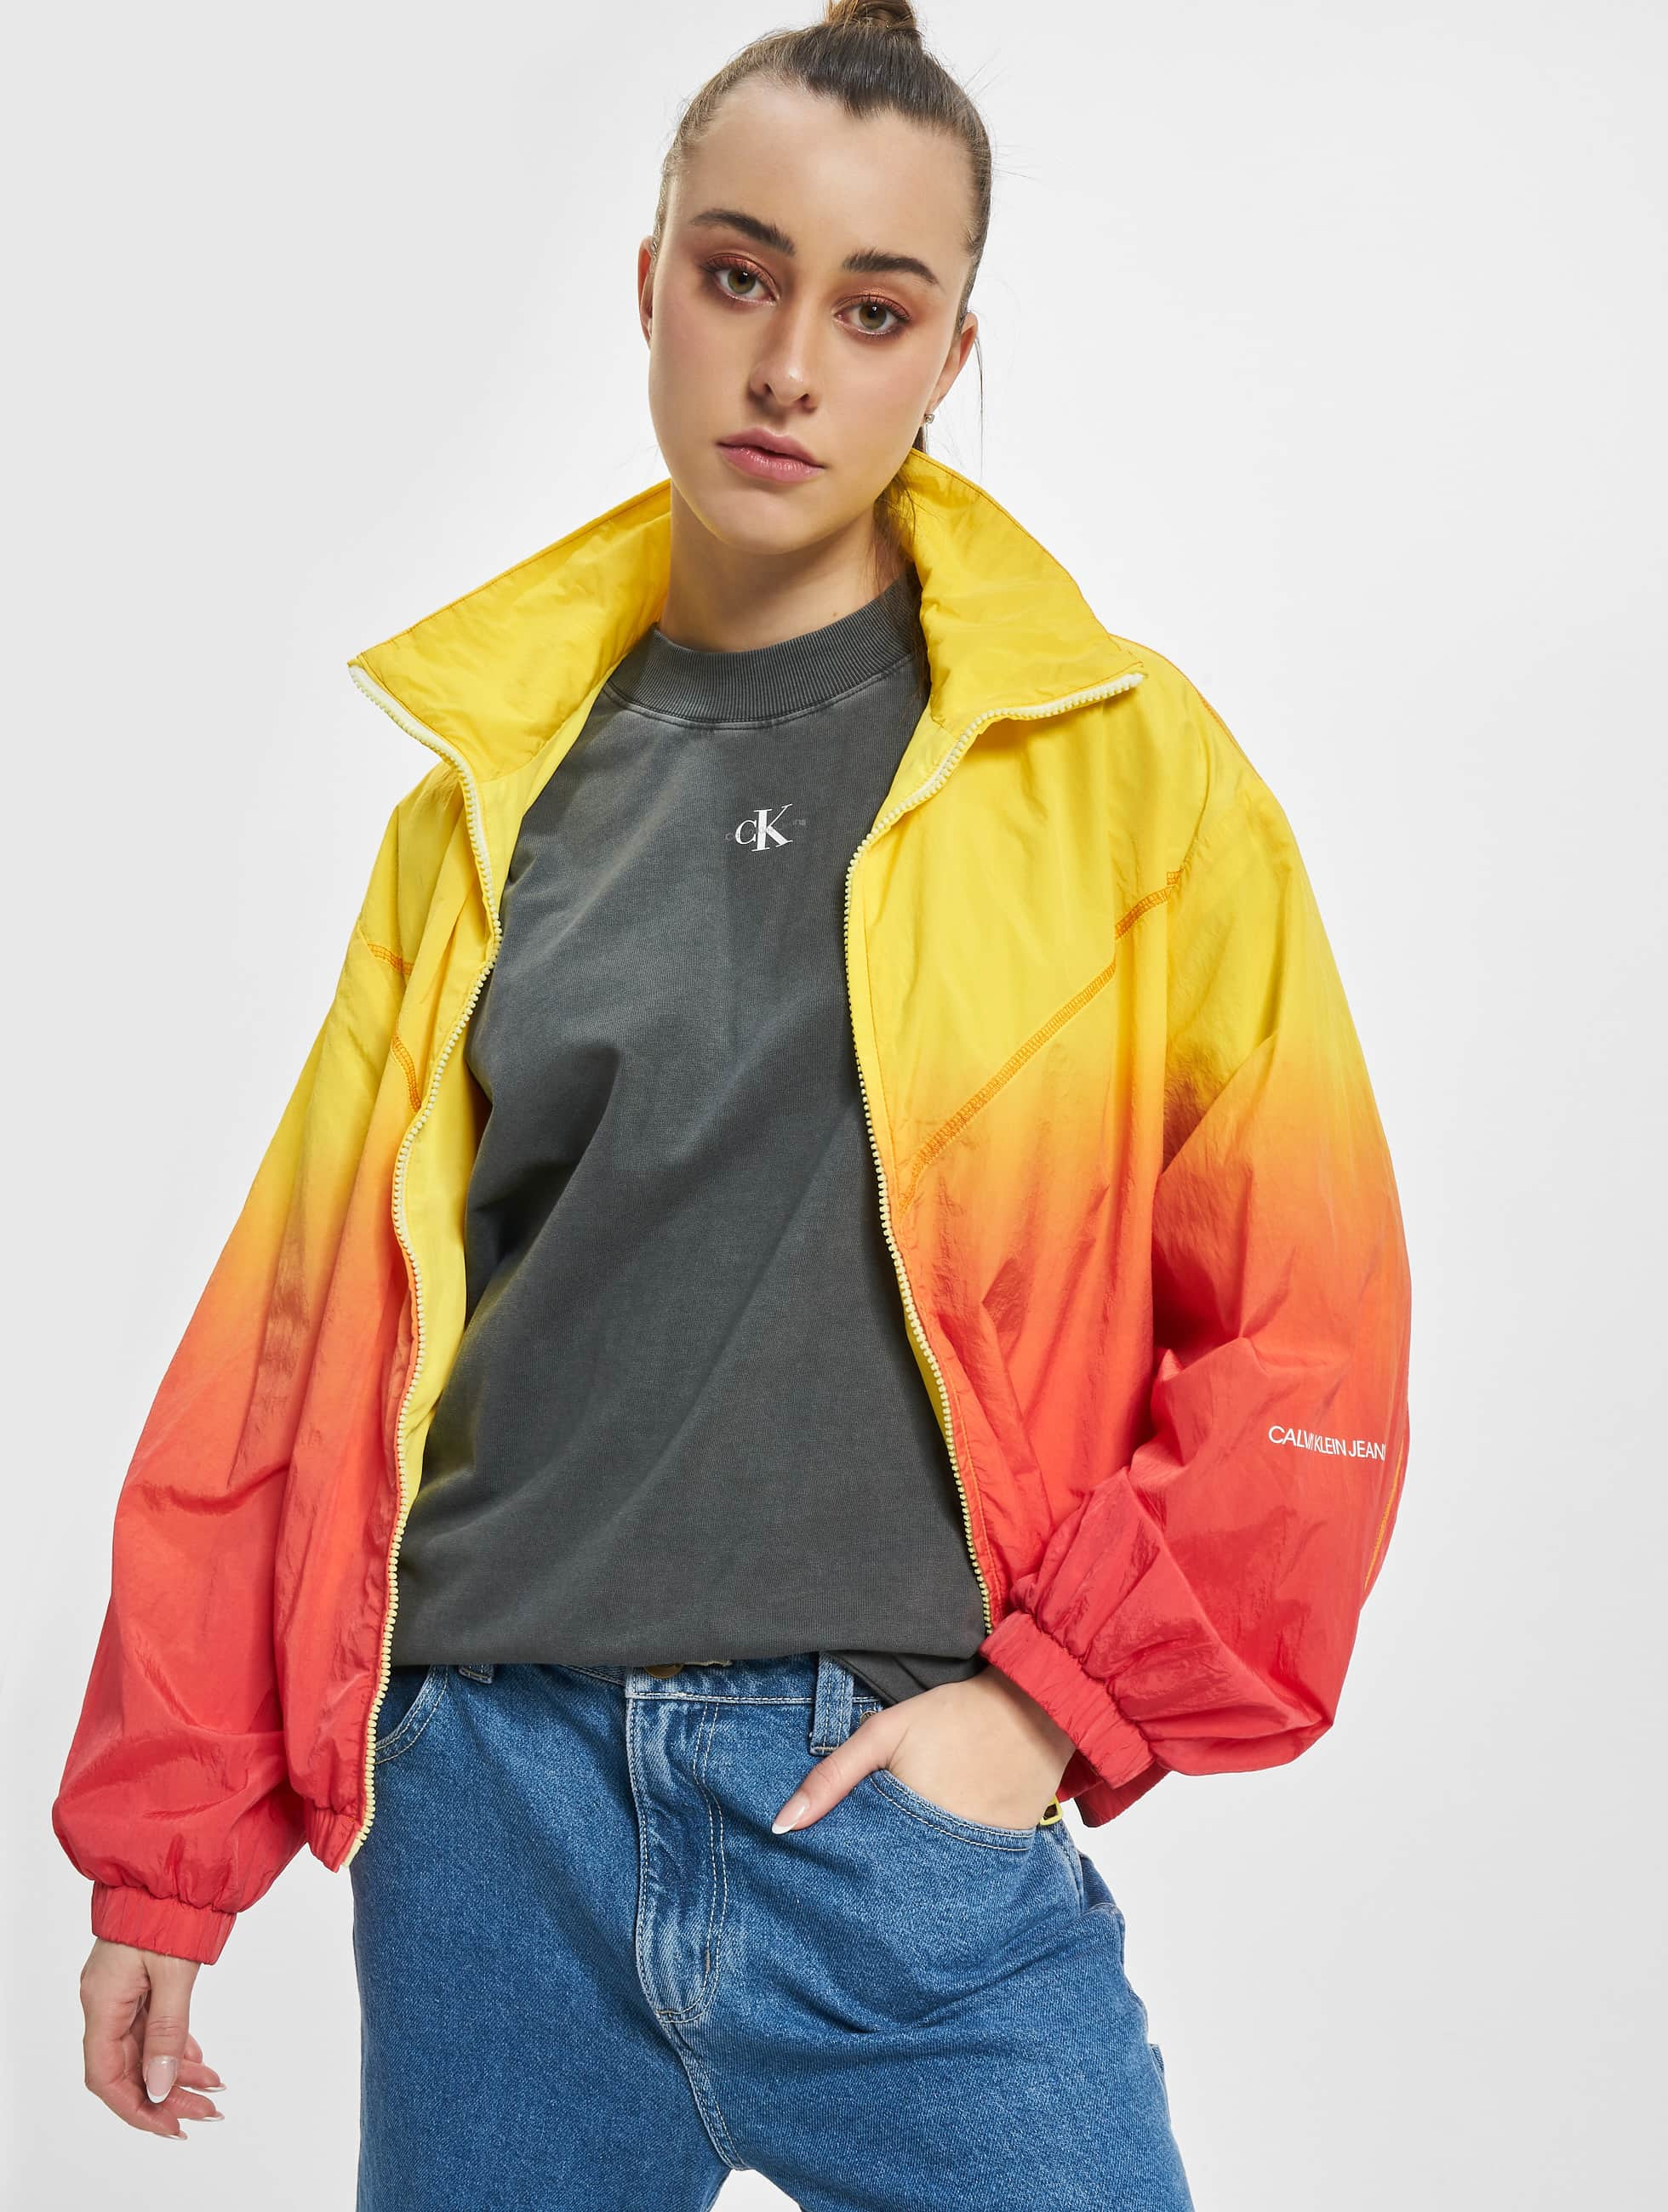 Calvin Klein / Transitional Jackets Dip Dye i gul 970751